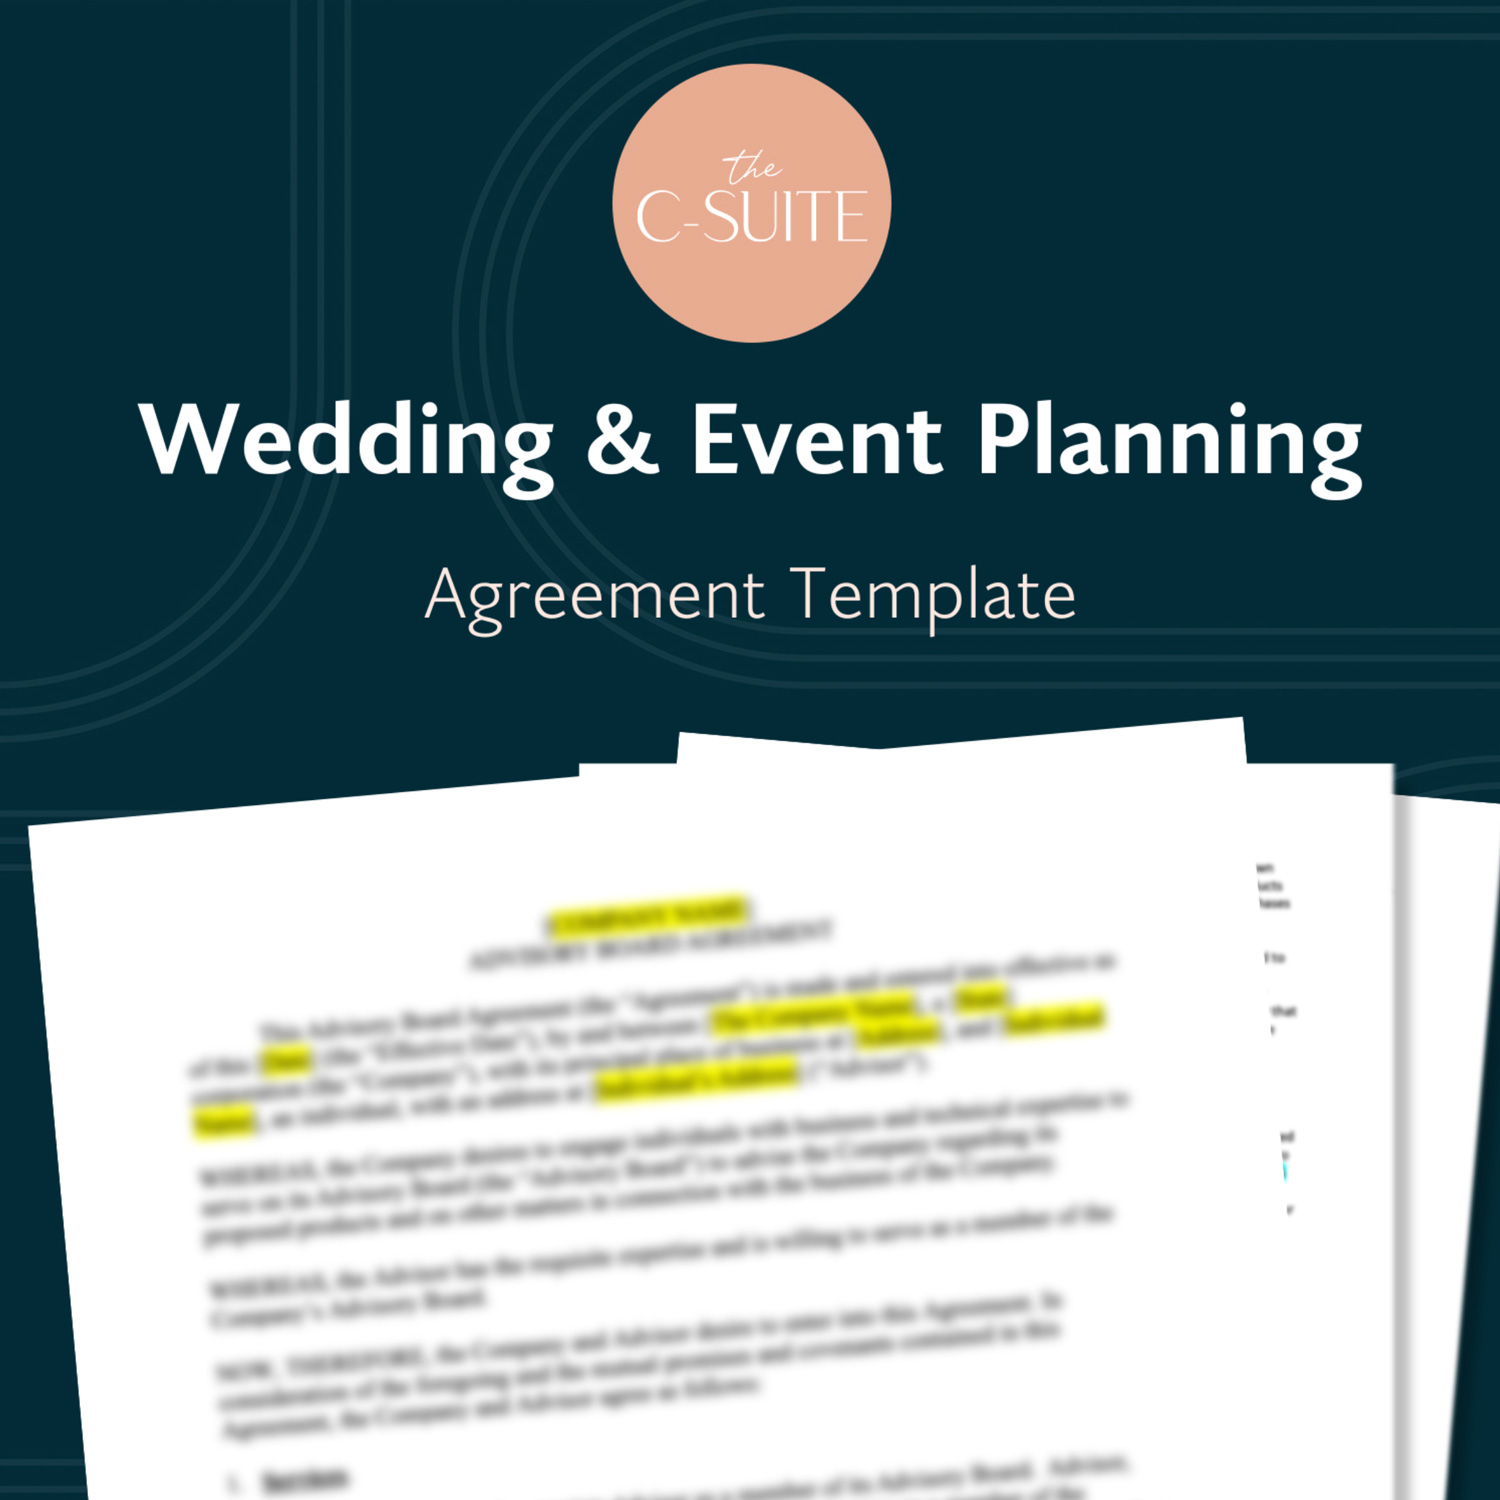 Wedding & Event Planning Agreement Template